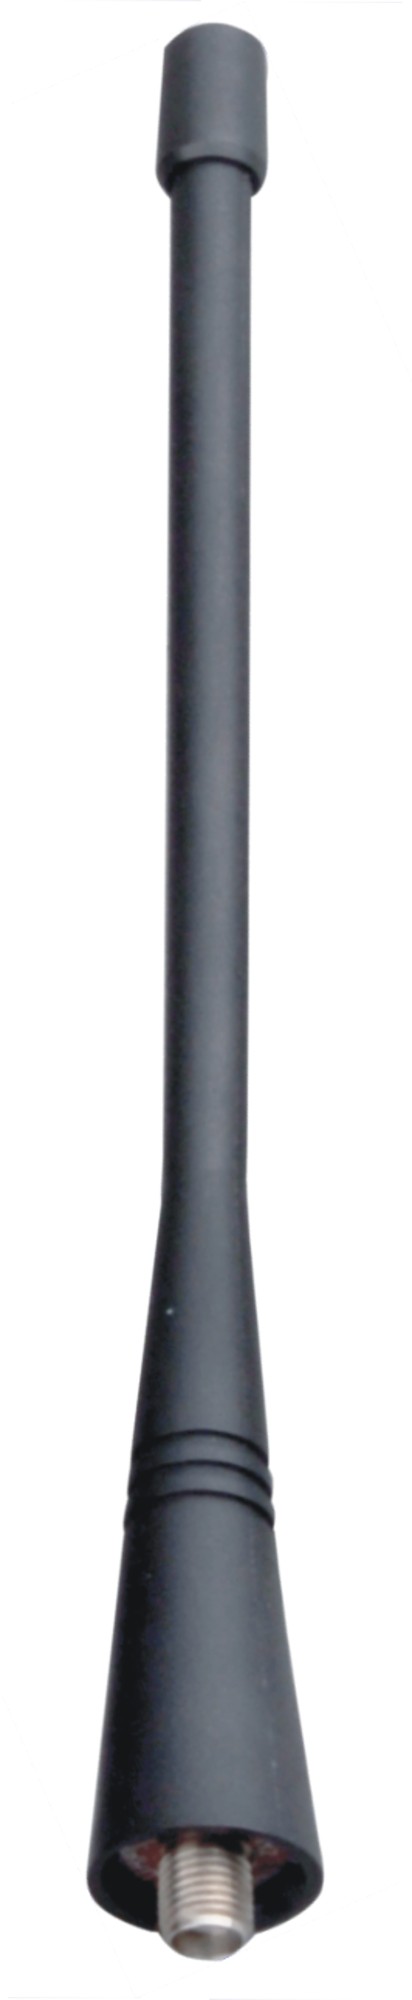 HYTERA UHF-Antenne, 15,3 cm, SMA- Buchse 420 - 470 MHz AN0445W01 580003017001